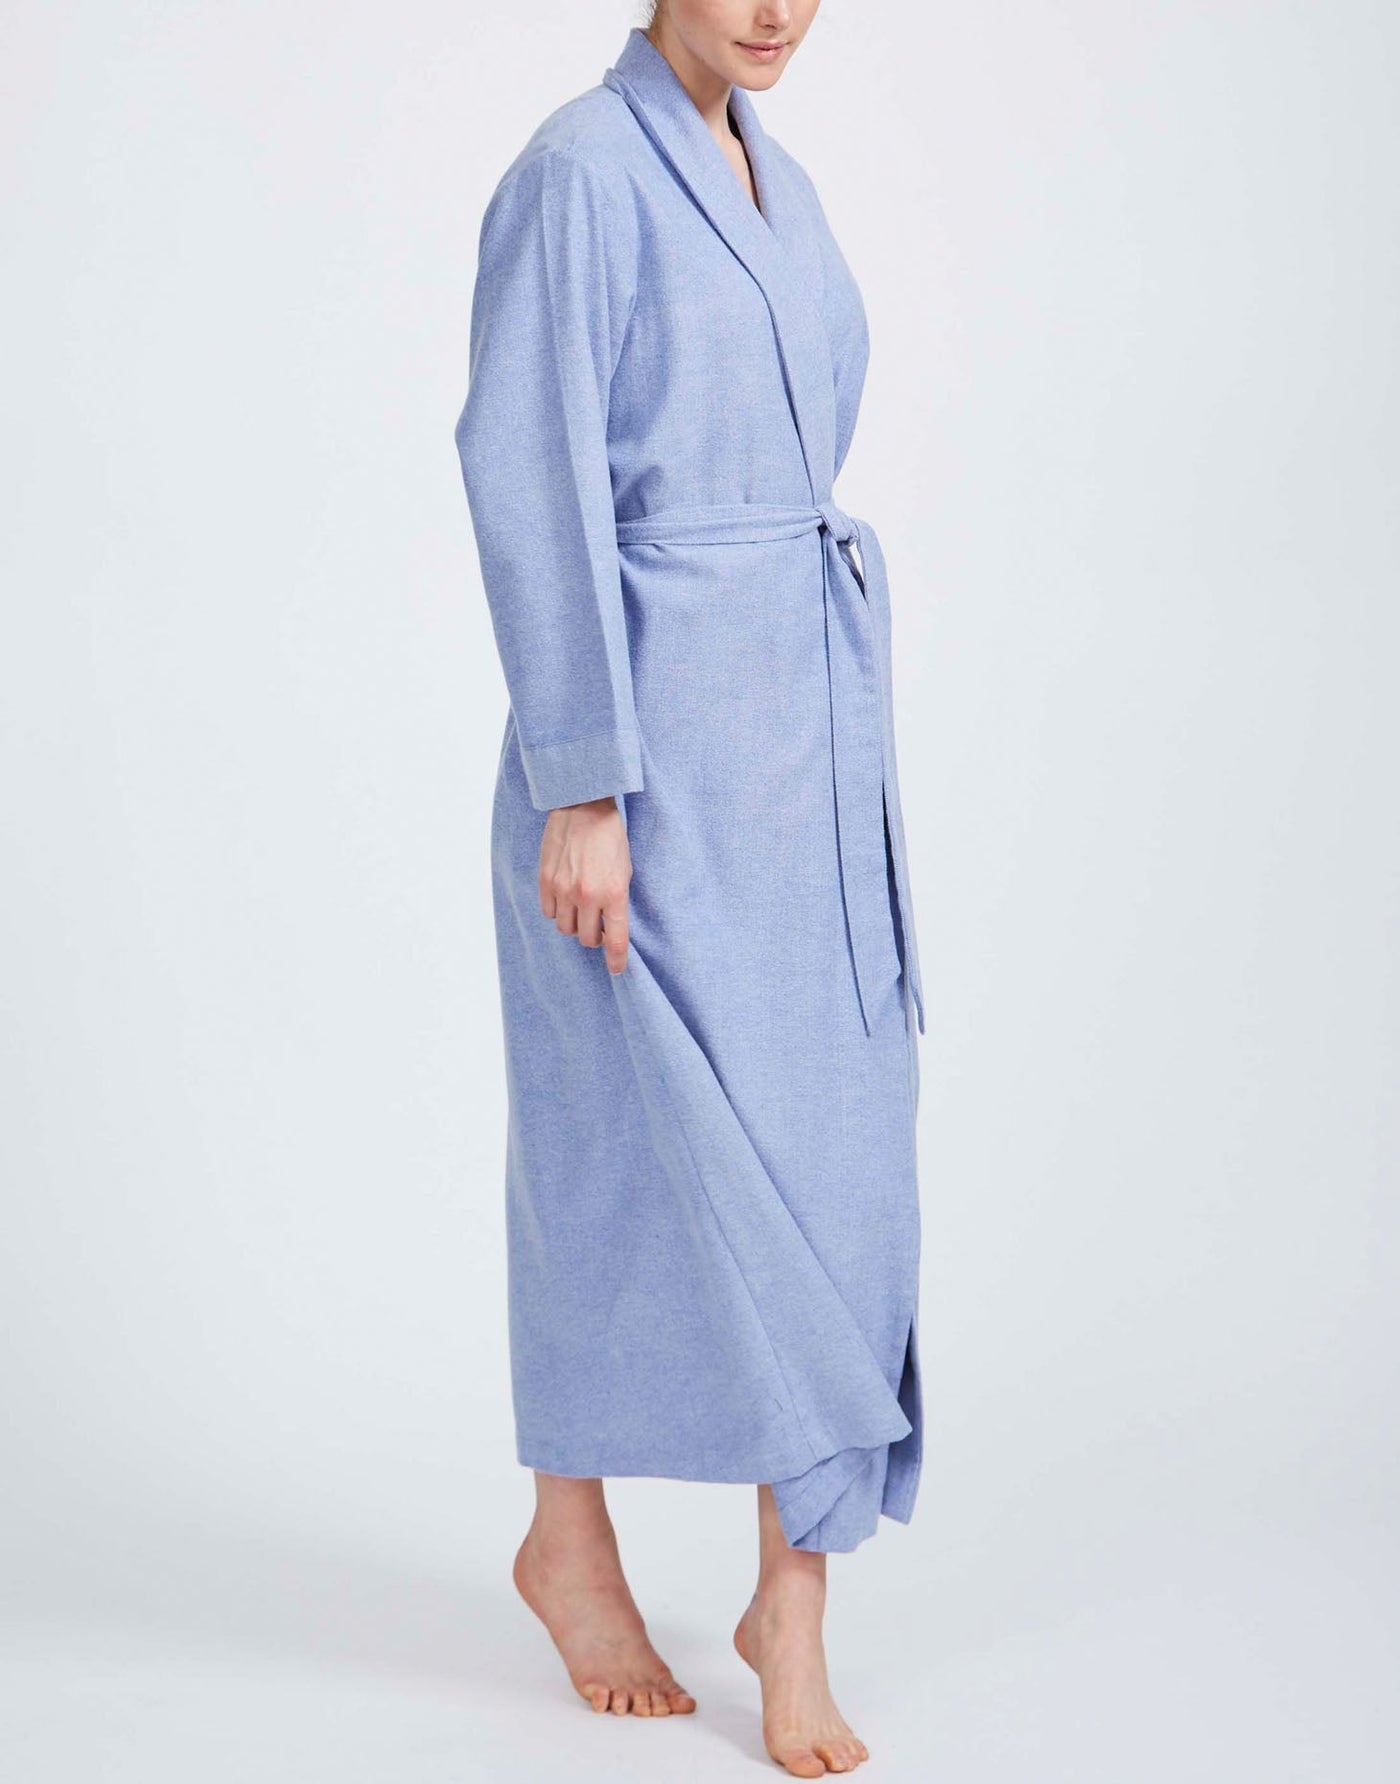 Women's Brushed Cotton Dressing Gown – Staffordshire Blue Herringbone